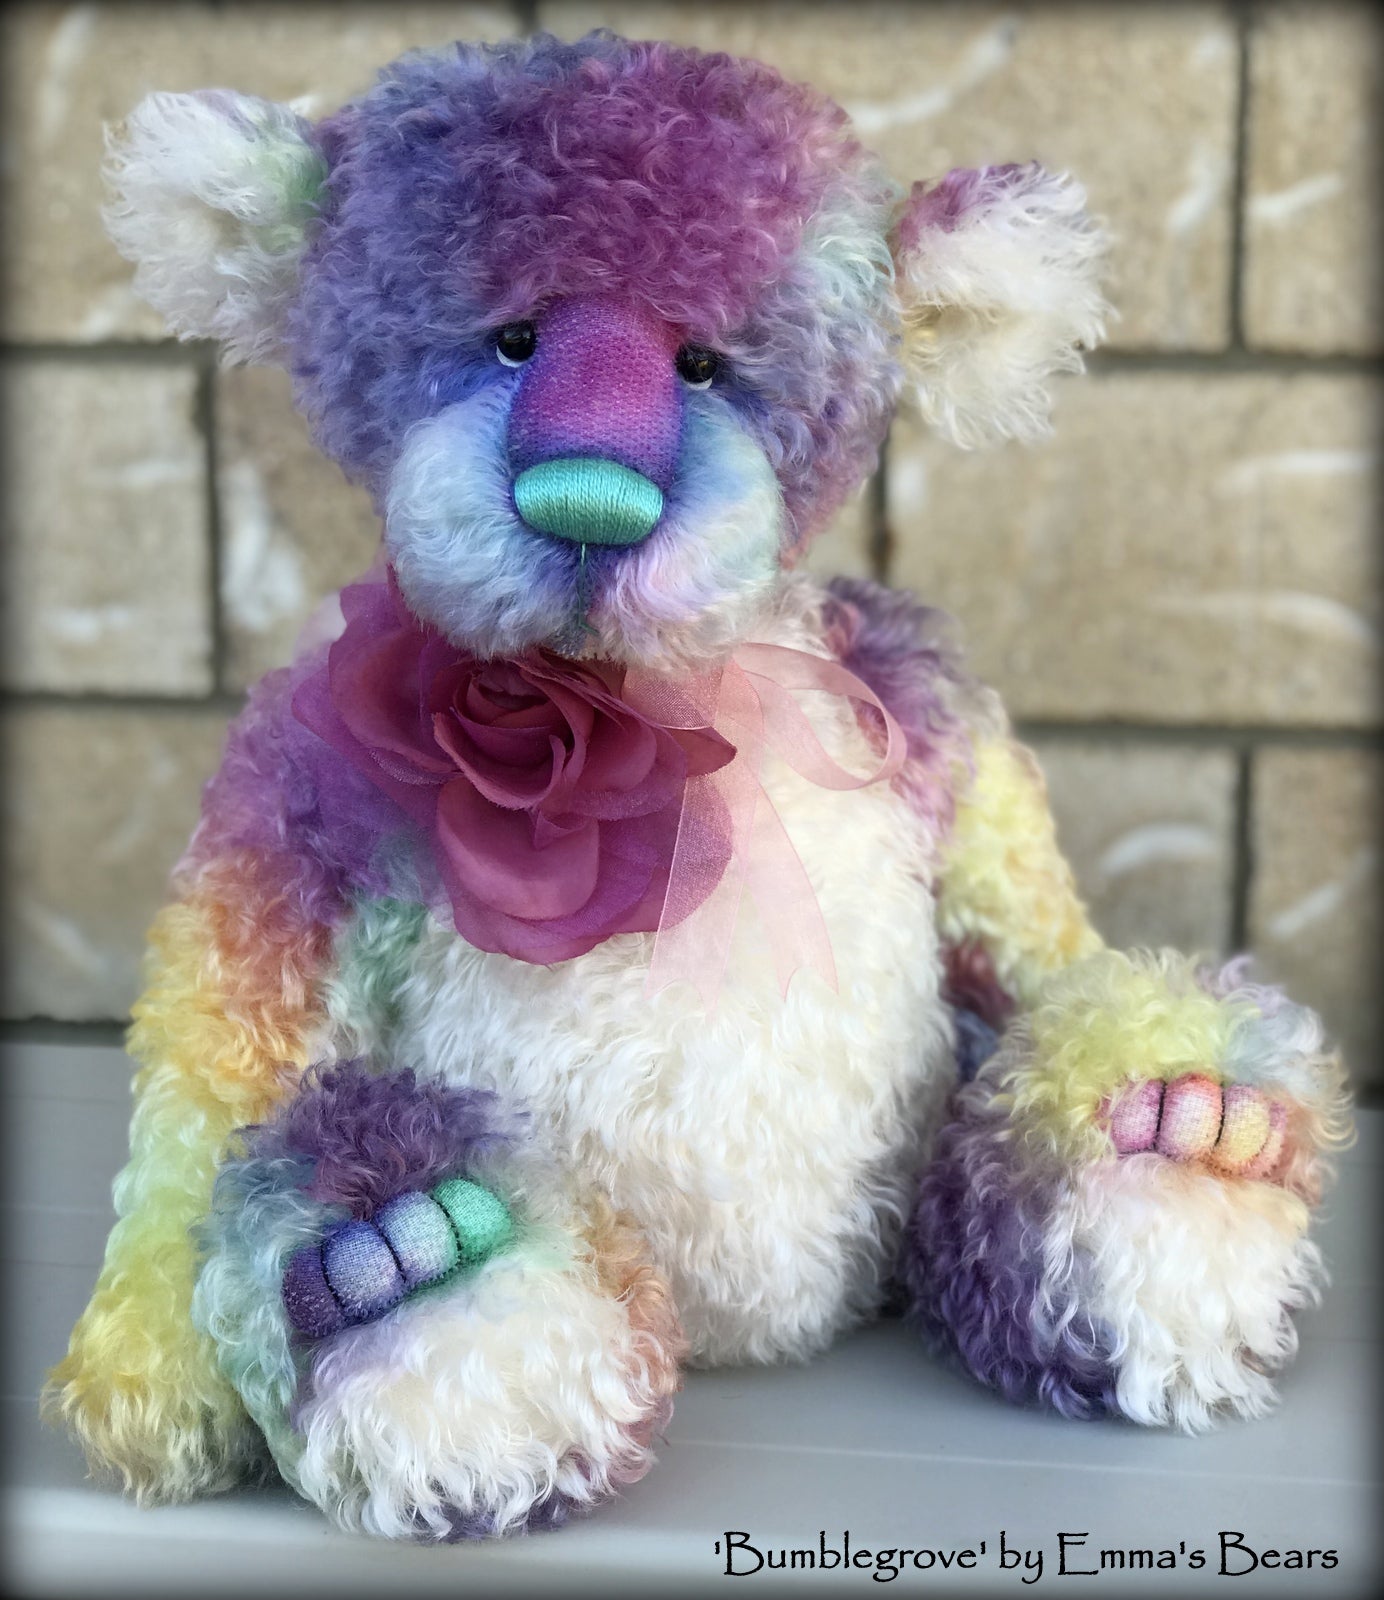 Bumblegrove - 17" Rainbow Kid Mohair Artist Bear by Emma's Bears - OOAK